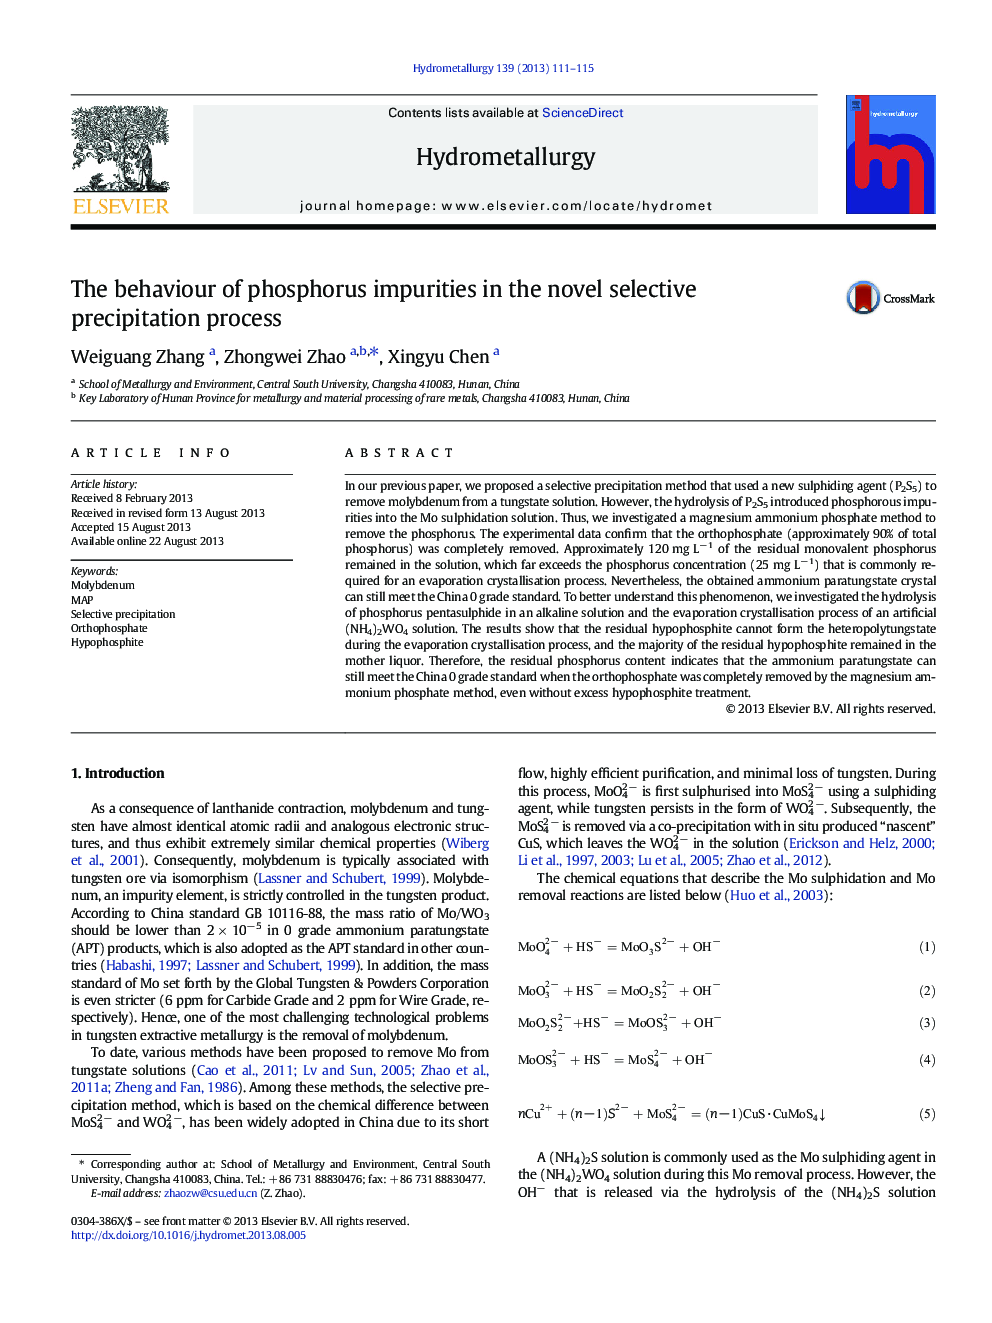 The behaviour of phosphorus impurities in the novel selective precipitation process